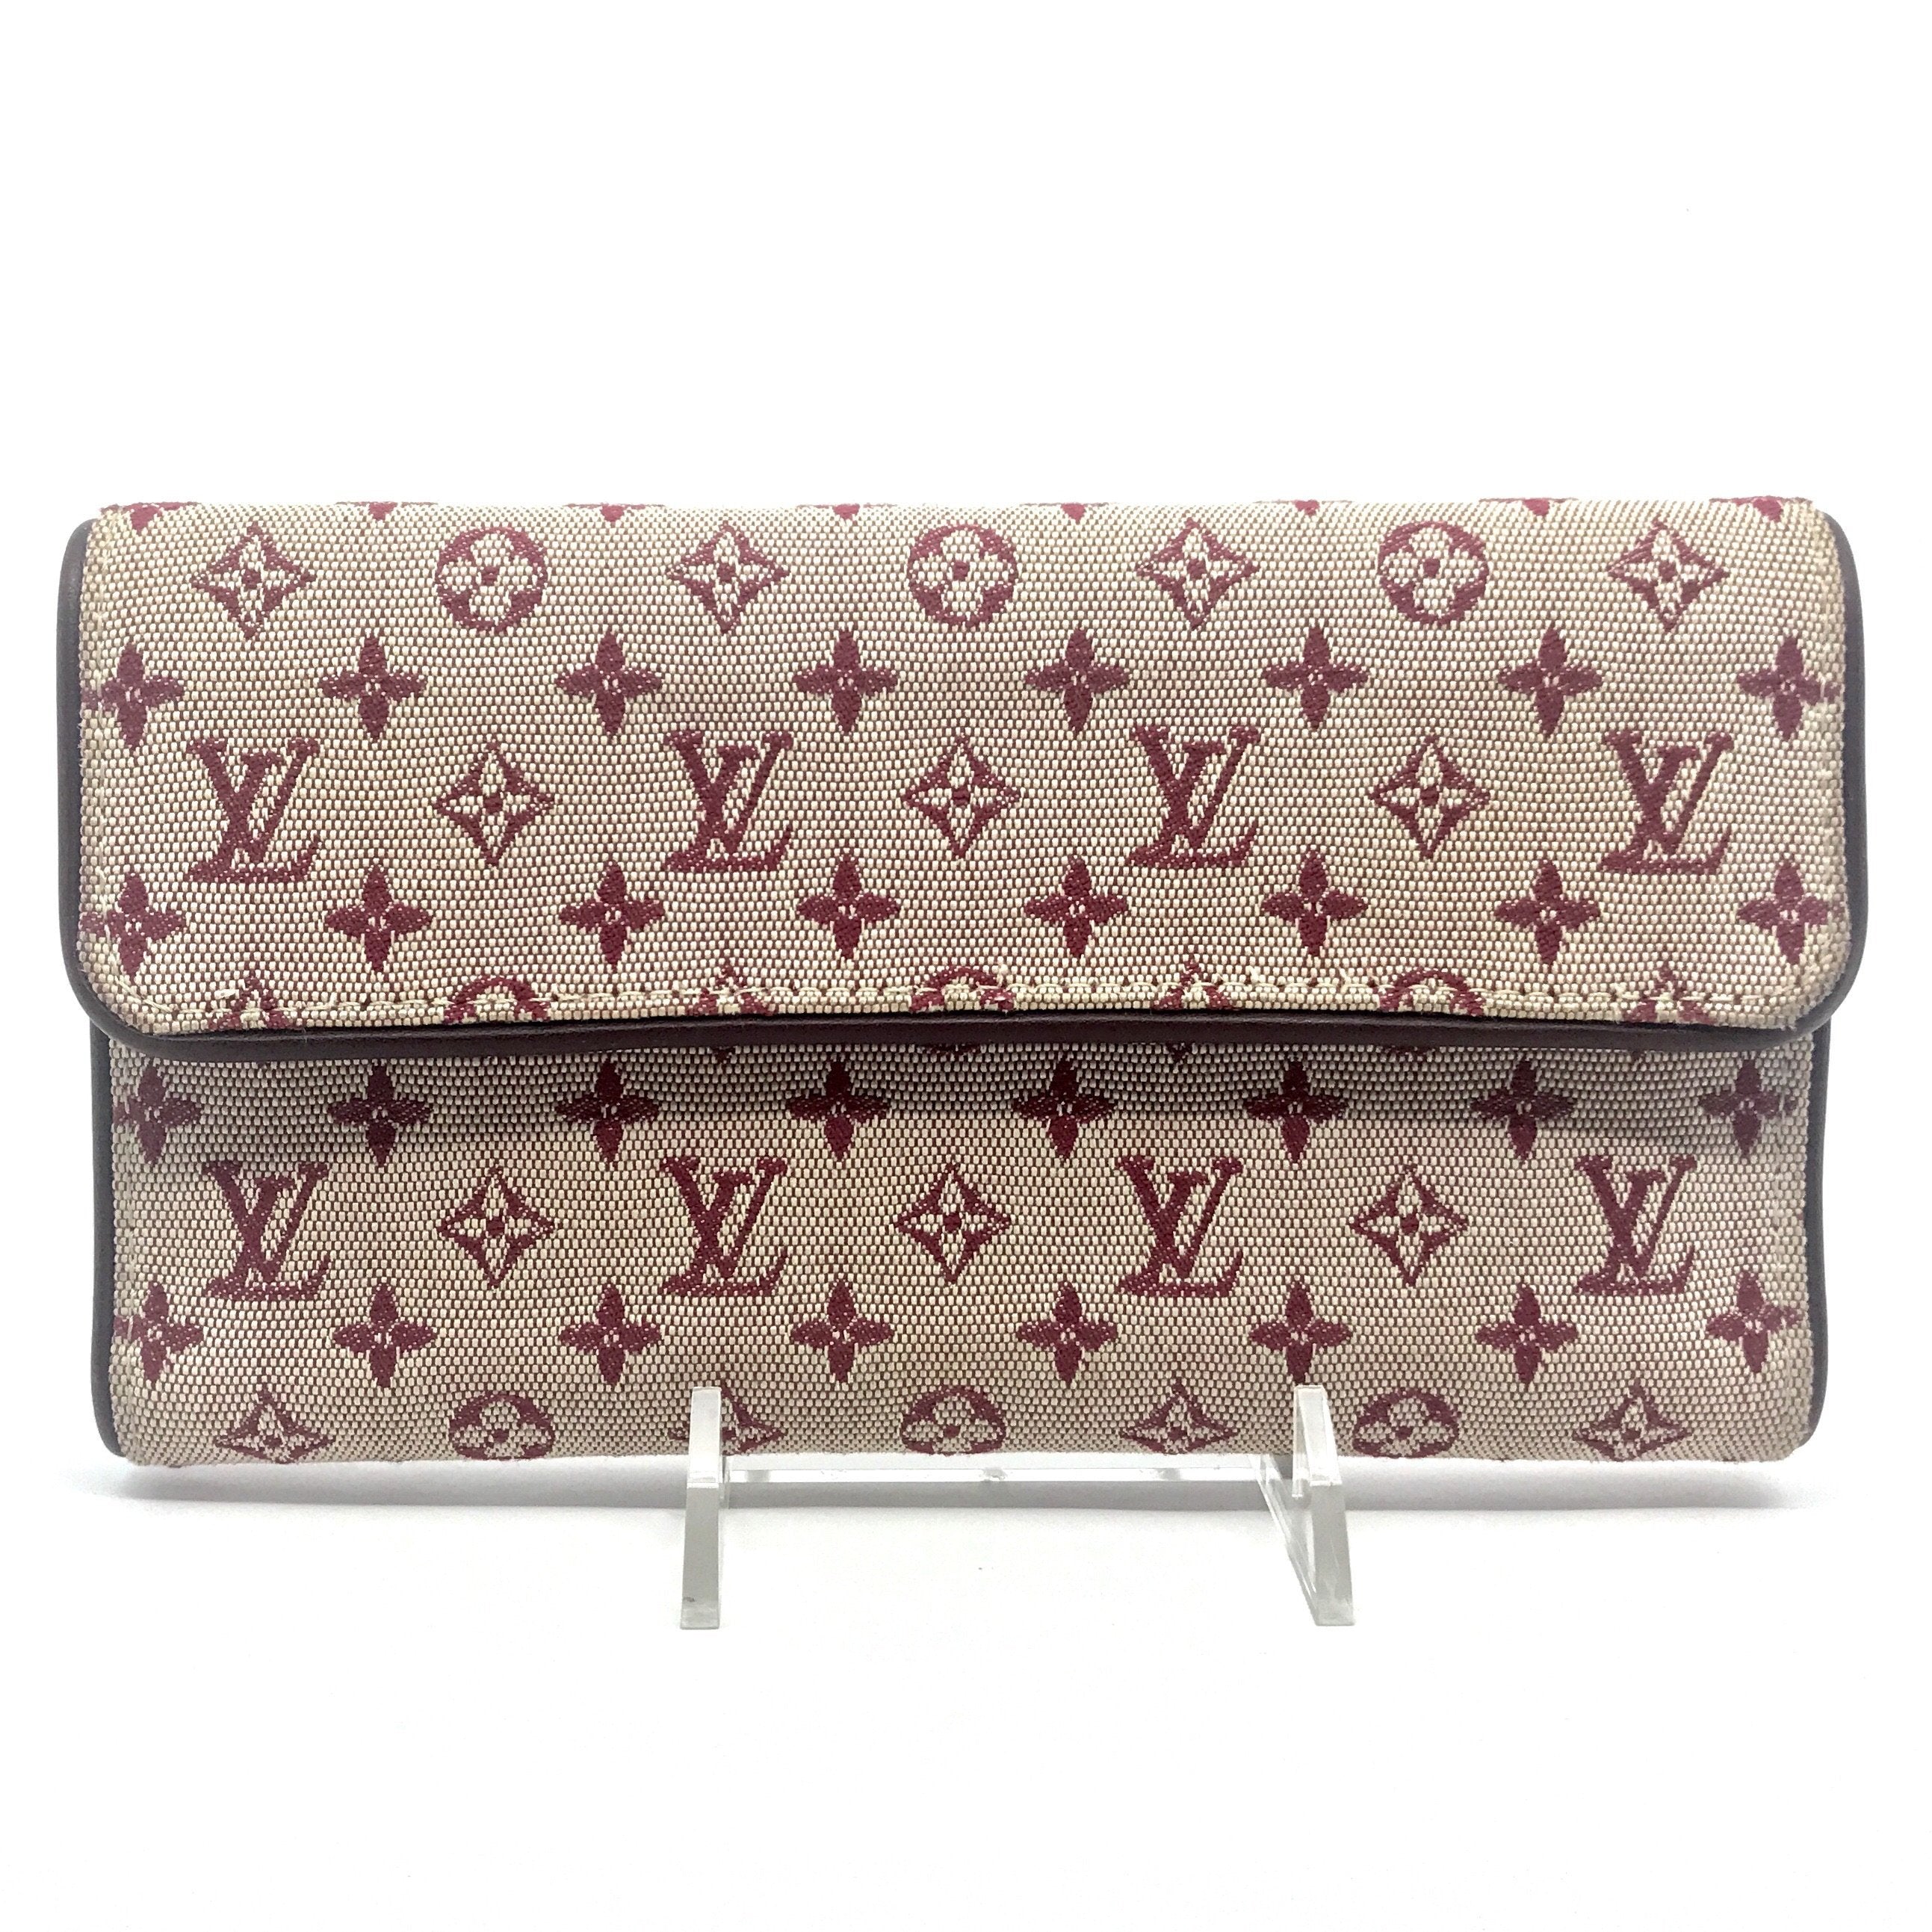 Wallet Monogram Cherry Louis Vuitton